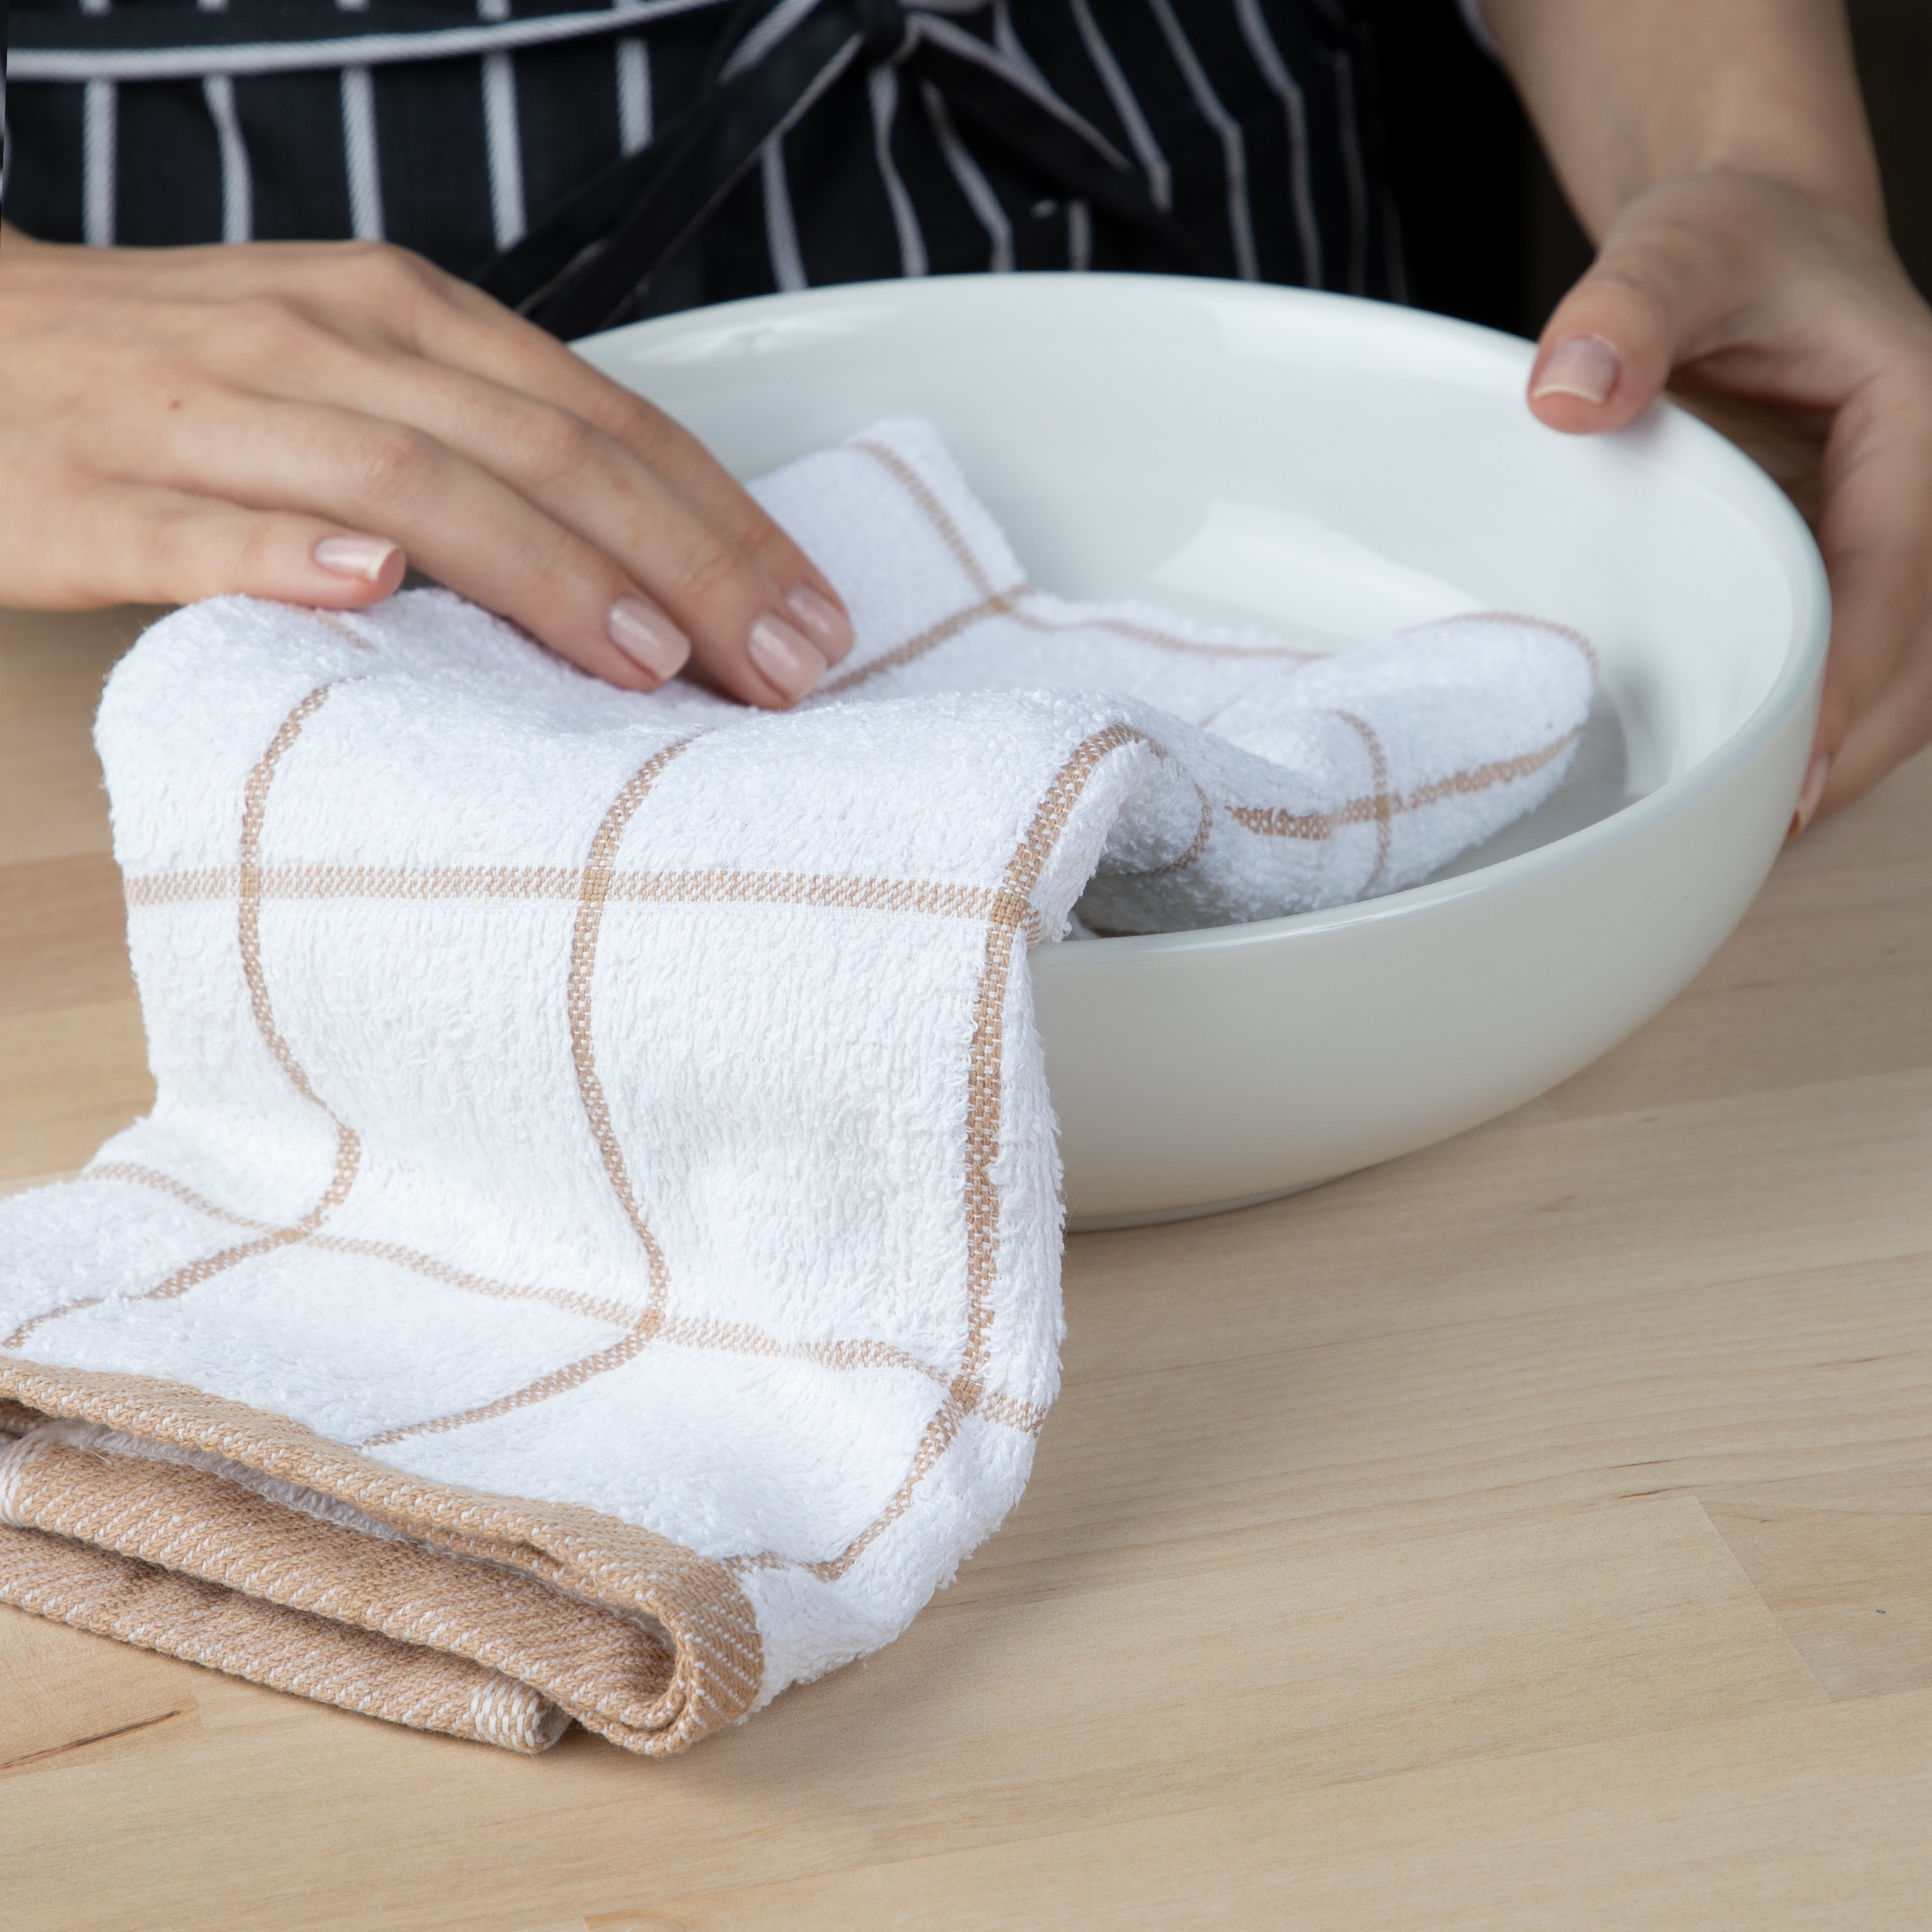 Cooks Linen Kitchen Towels - 12 Pack - 15x25 - On Sale - Bed Bath